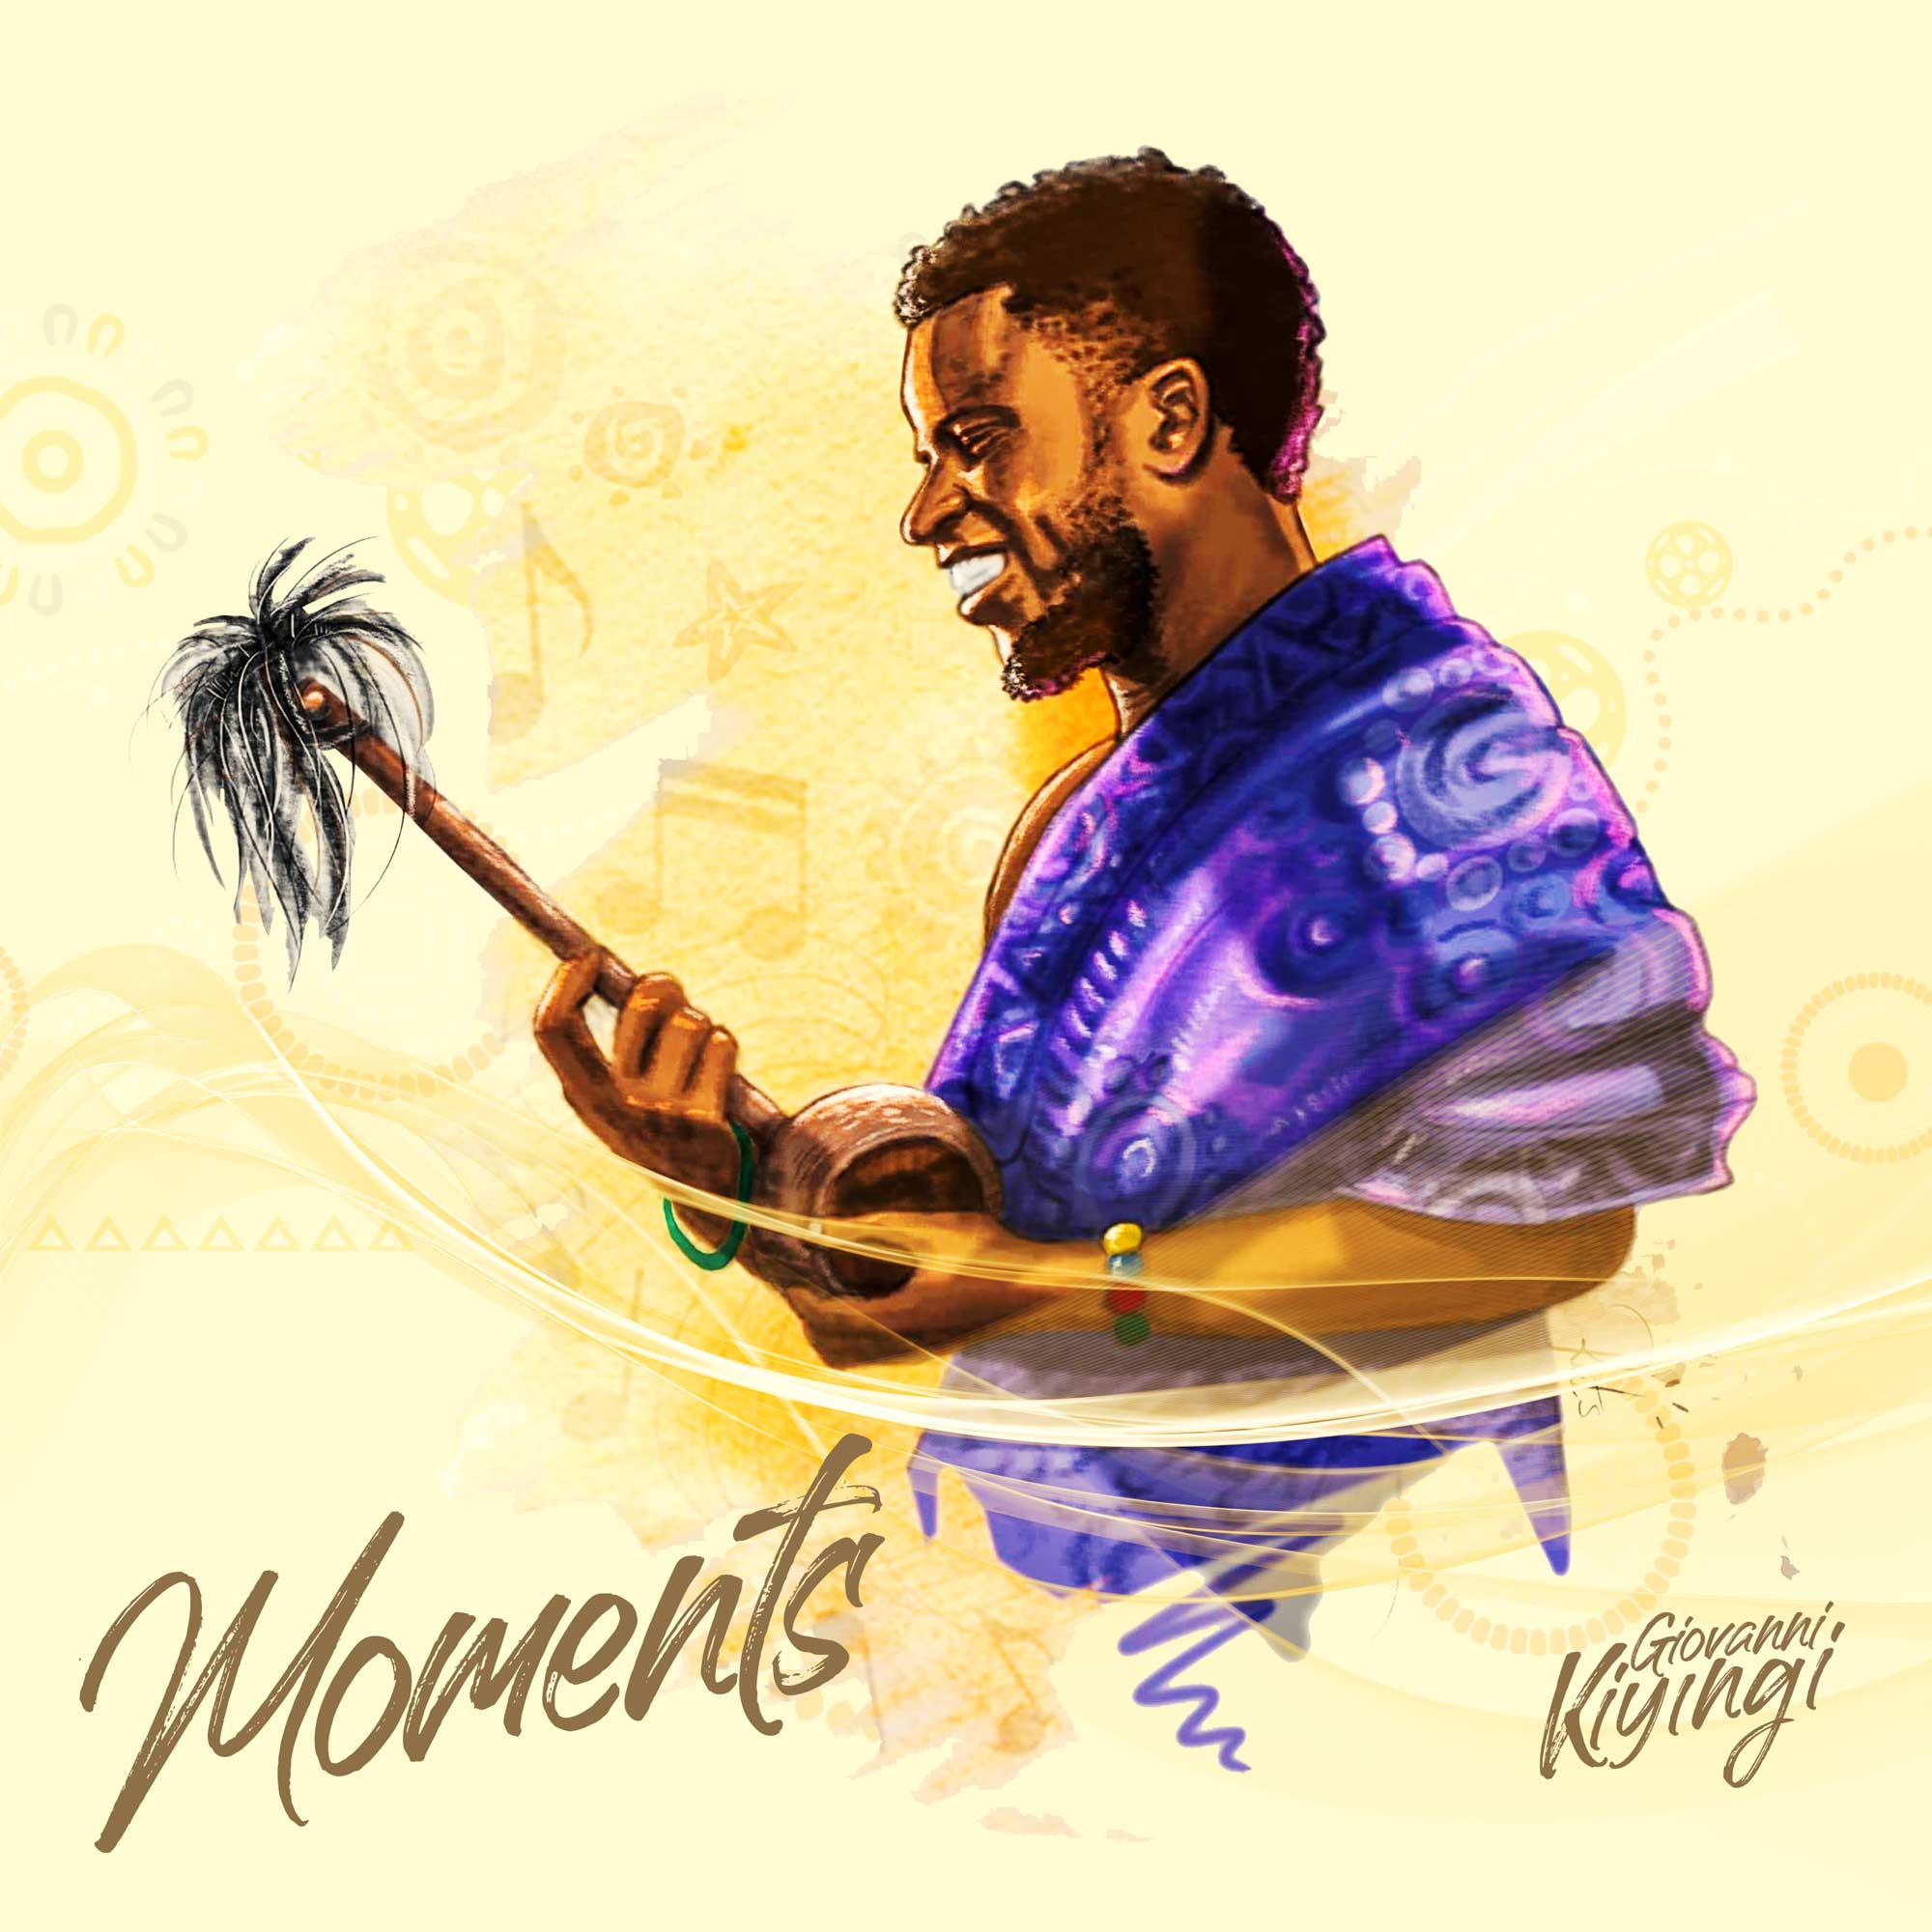 Giovanni Kiyingi Moments (EP)